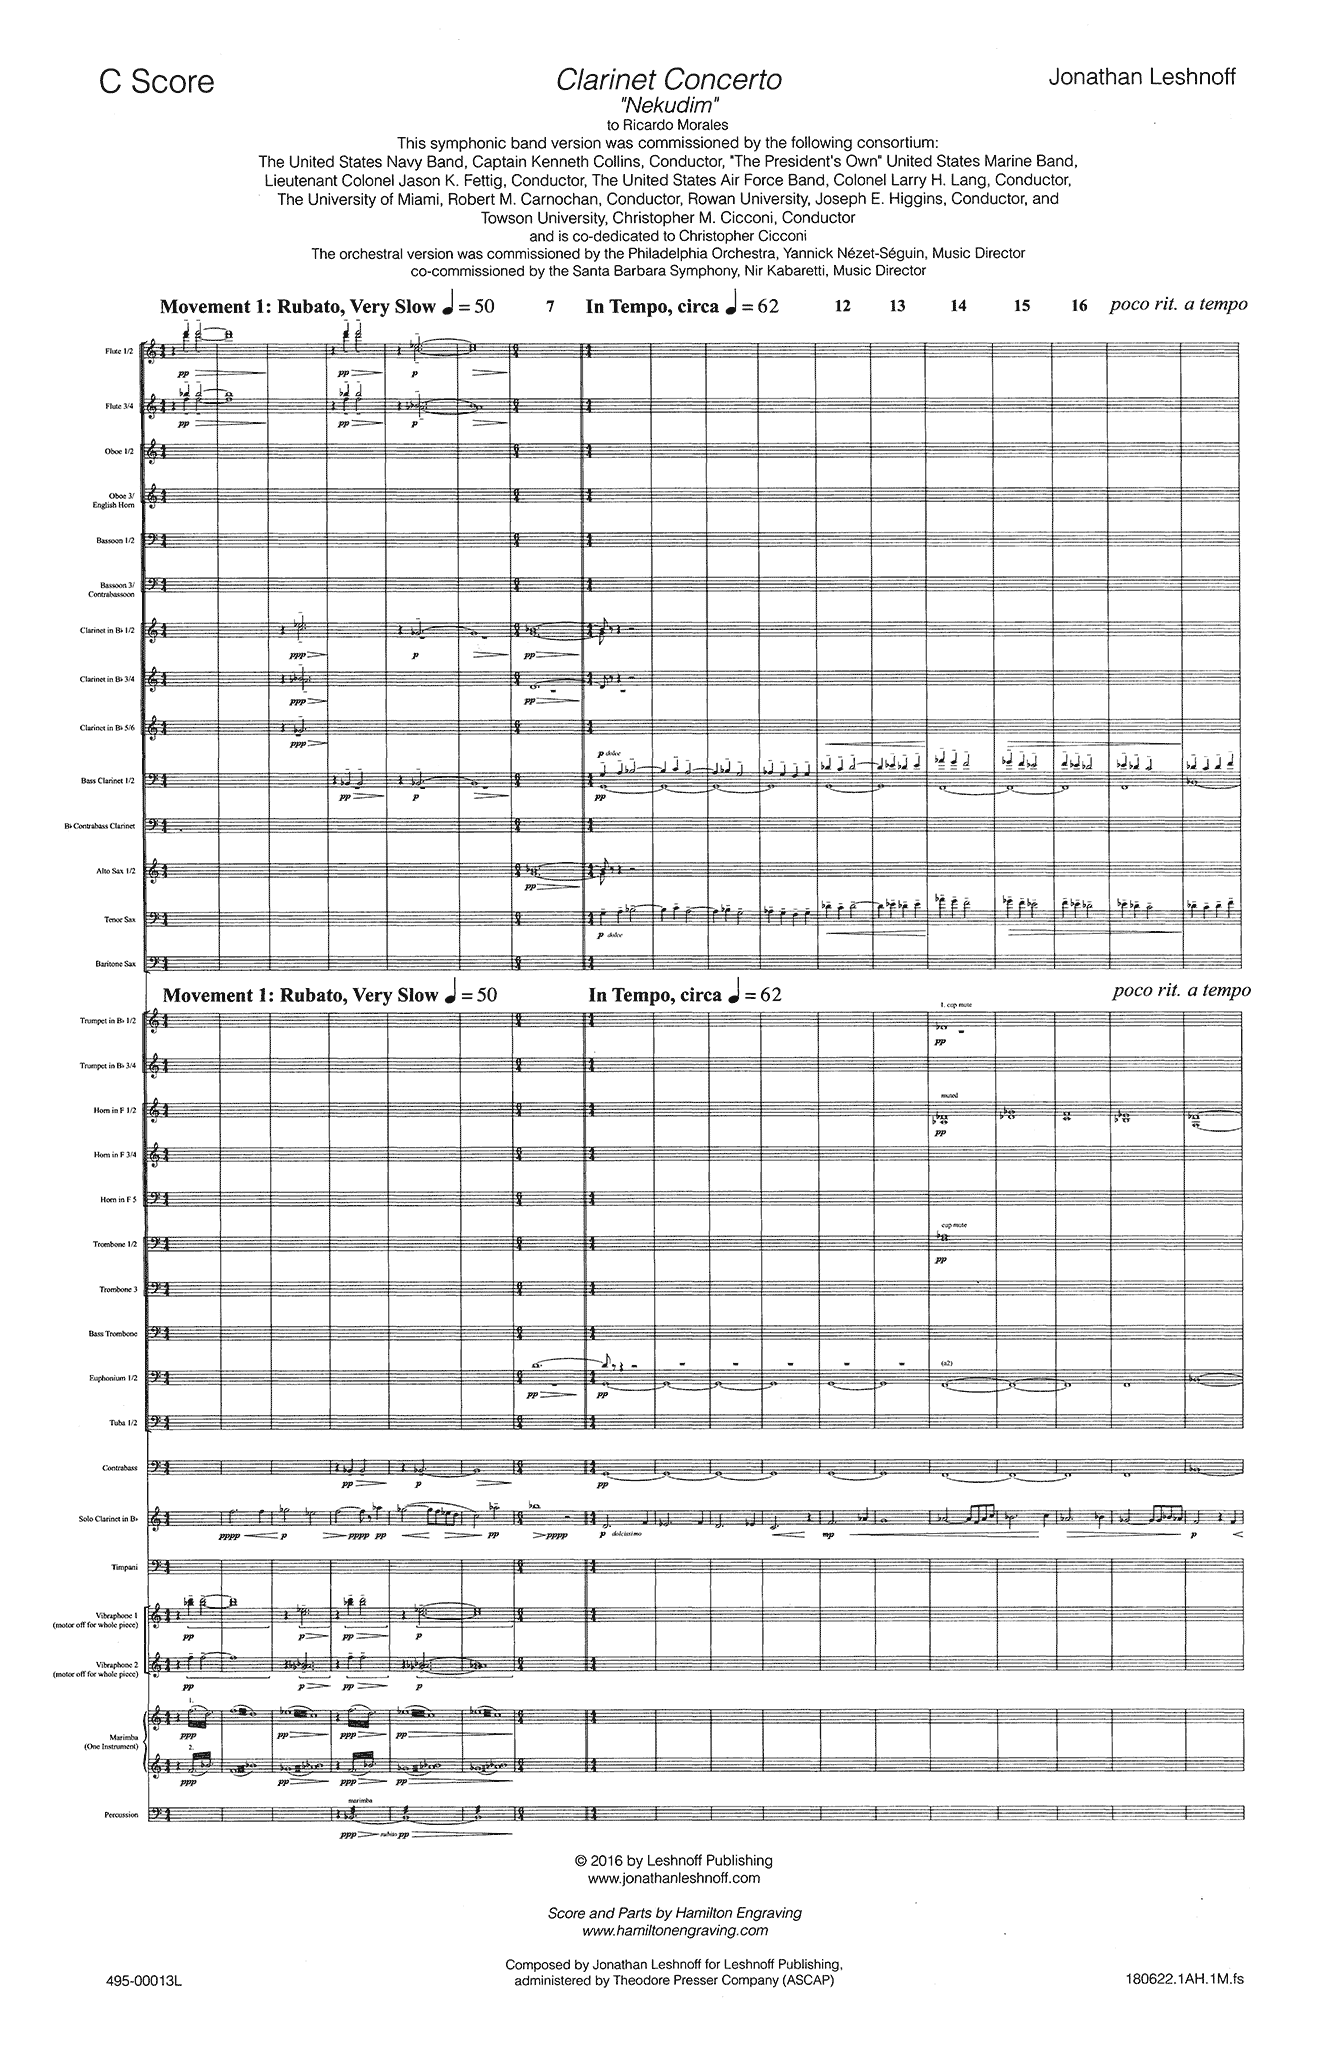 Leshnoff Clarinet Concerto ‘Nekudim’ wind ensemble large score cover - Movement 1